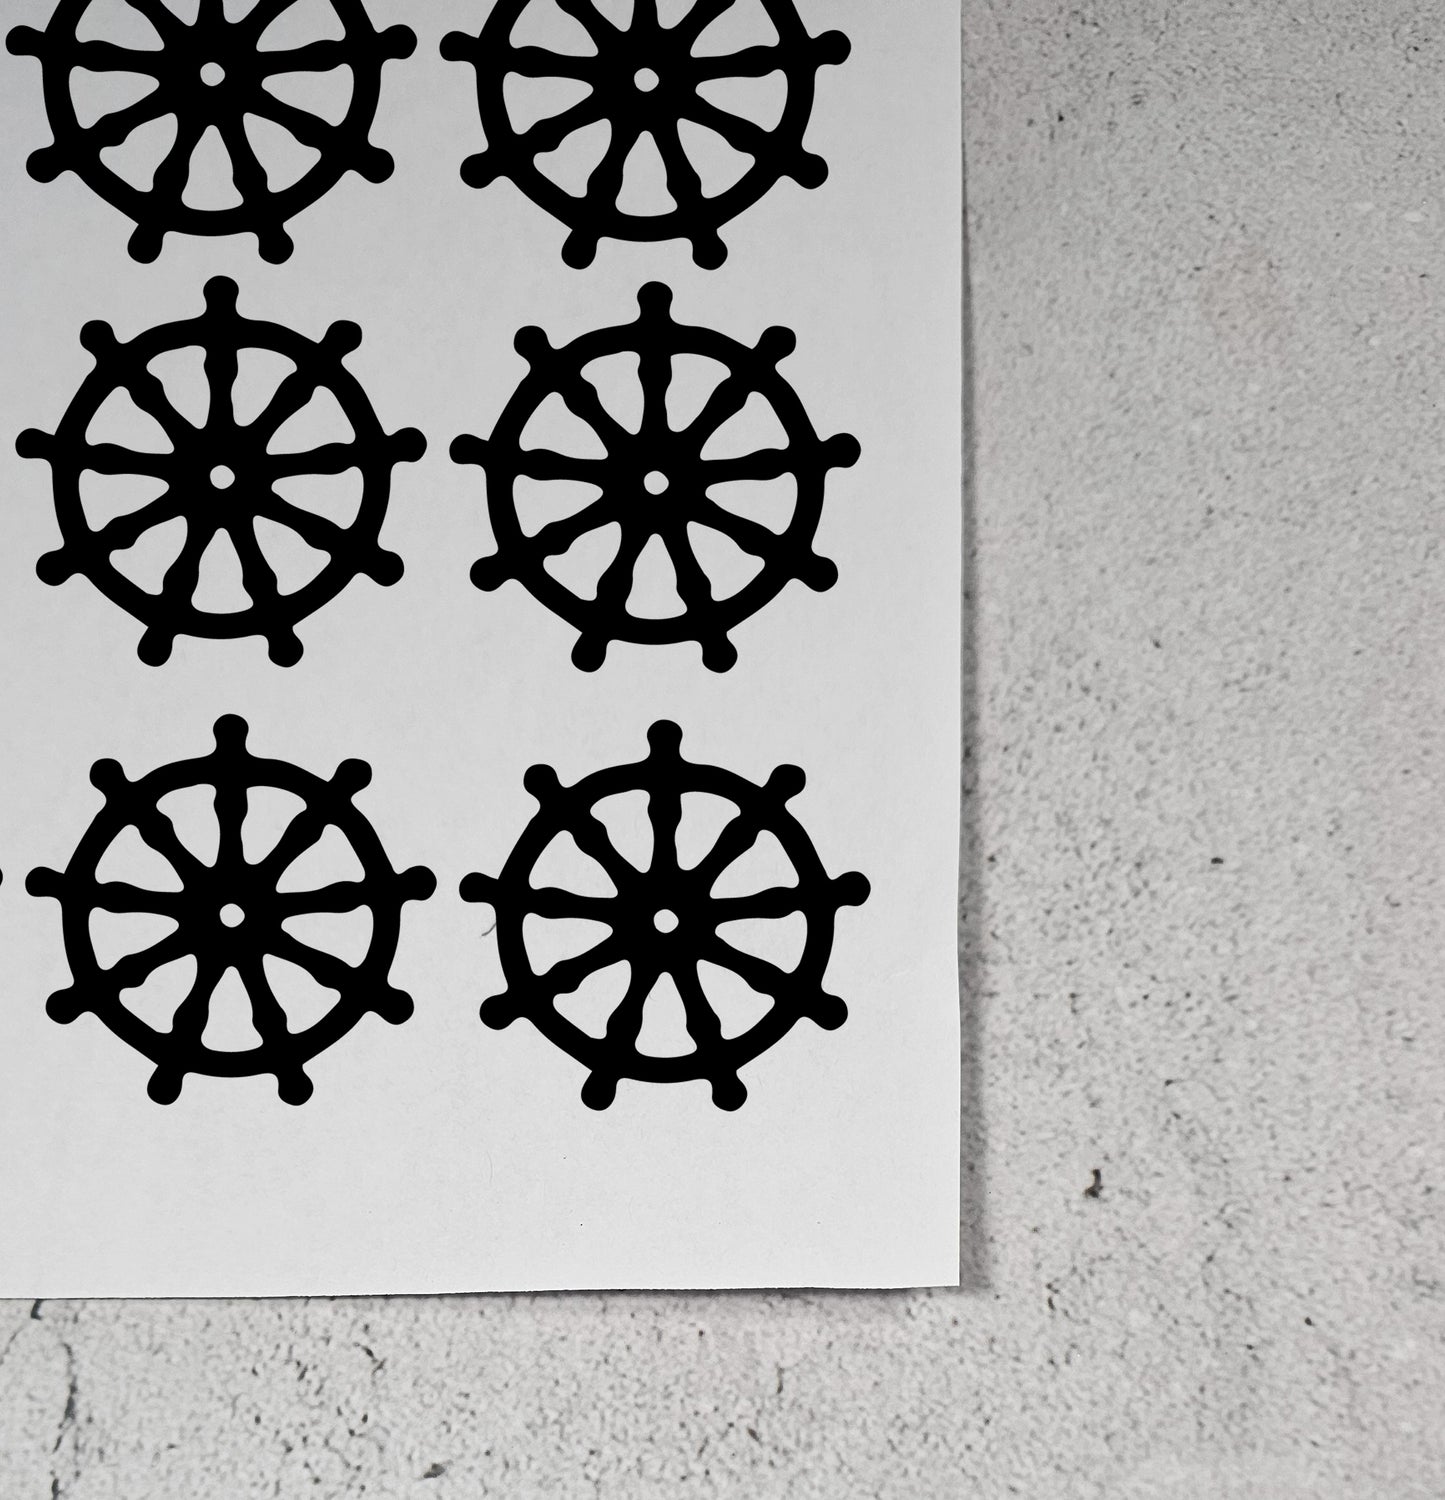 Ship Wheel Adhesive Stencil